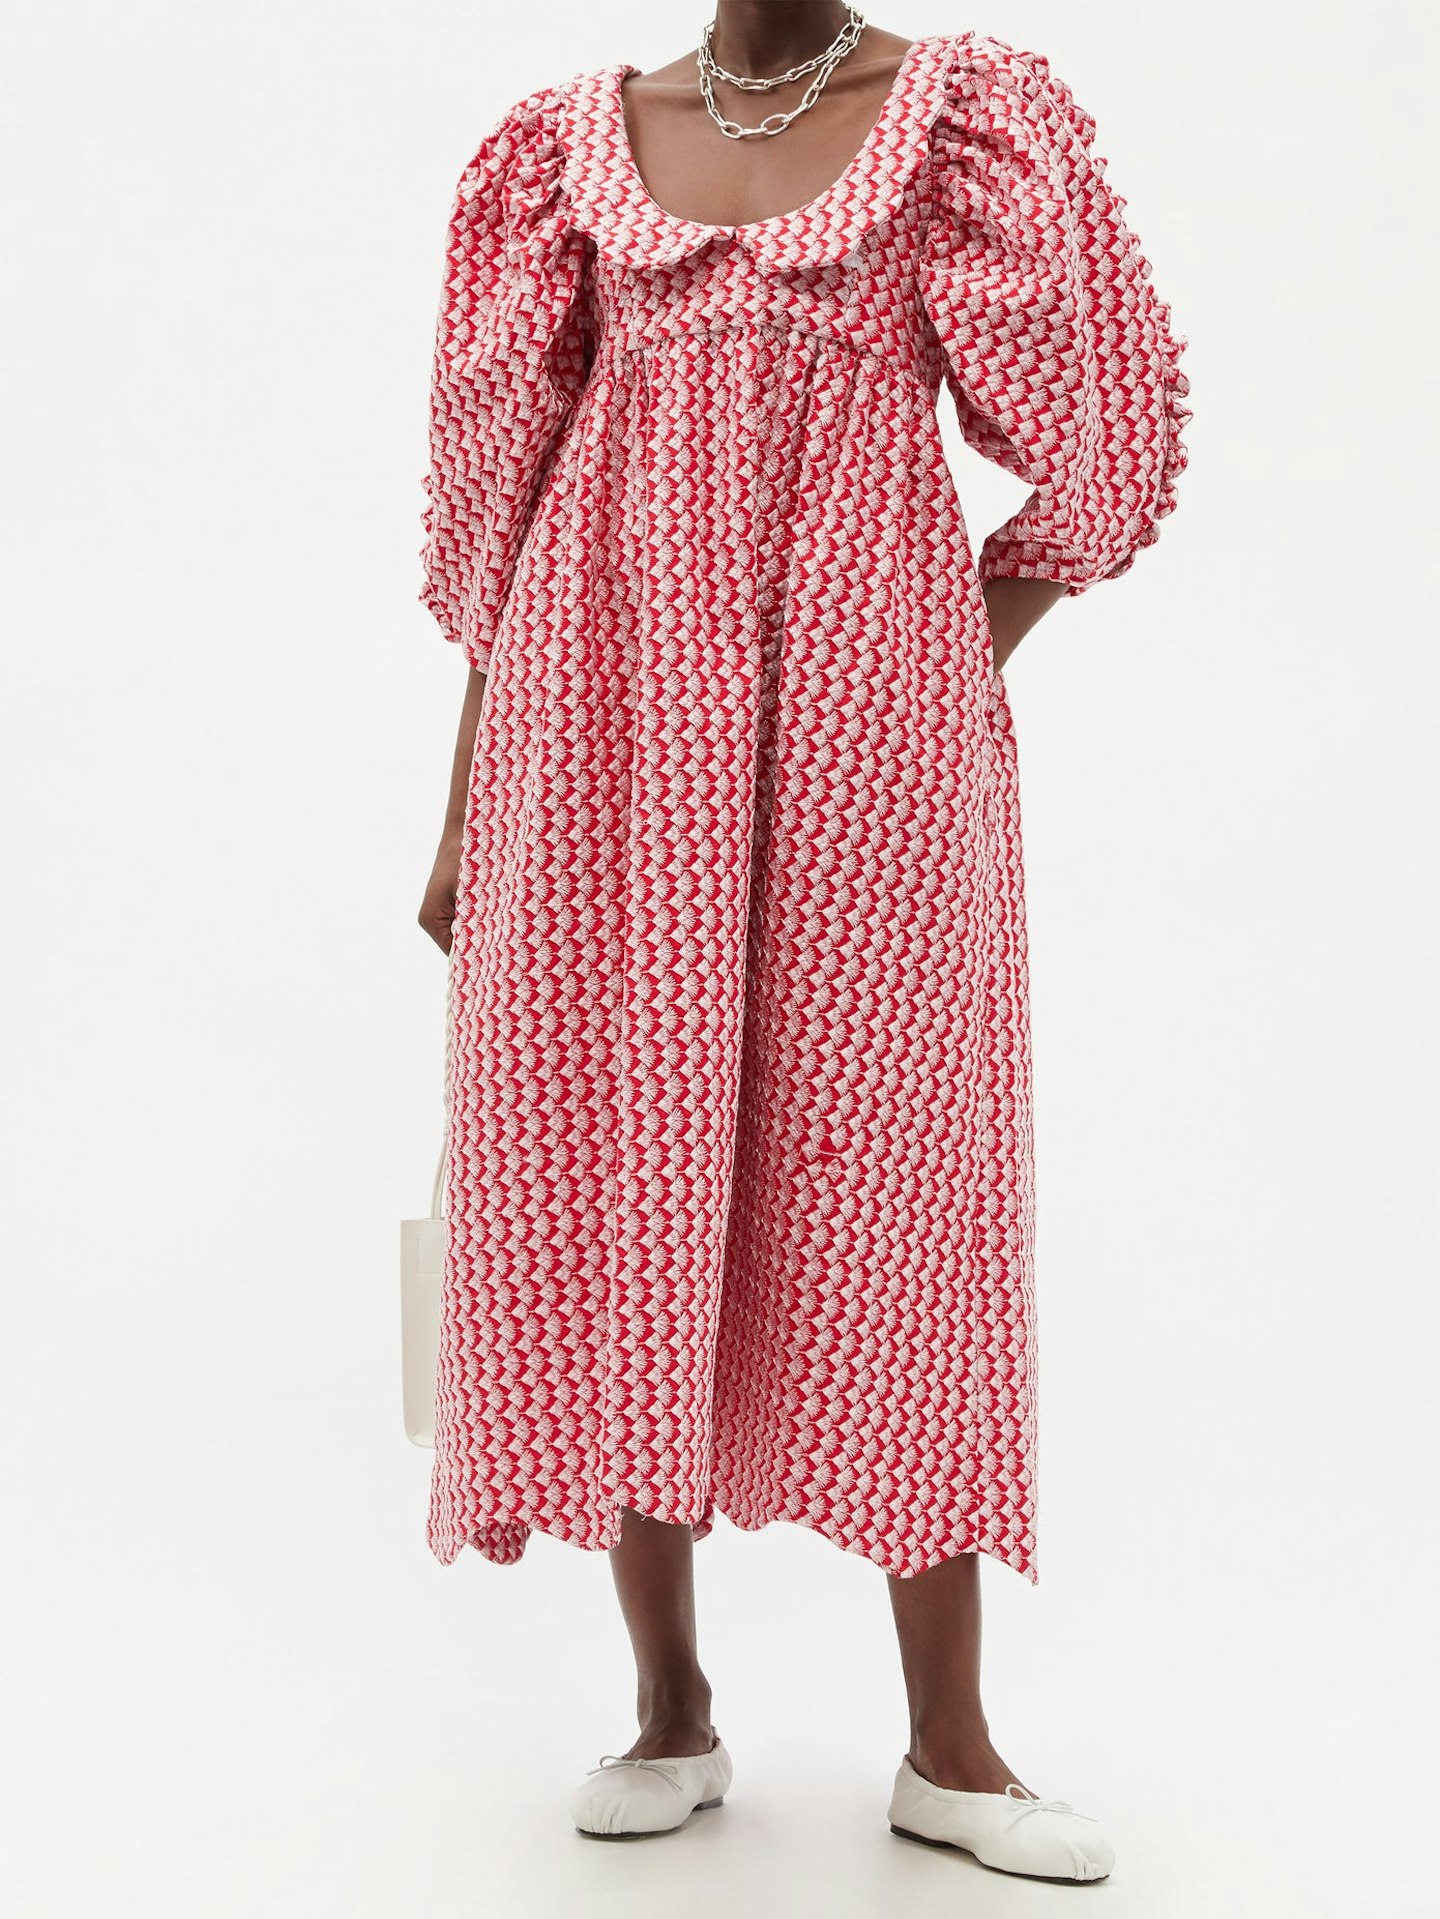 Kika Vargas, Embroidered Cotton-Blend Midi Dress, £865